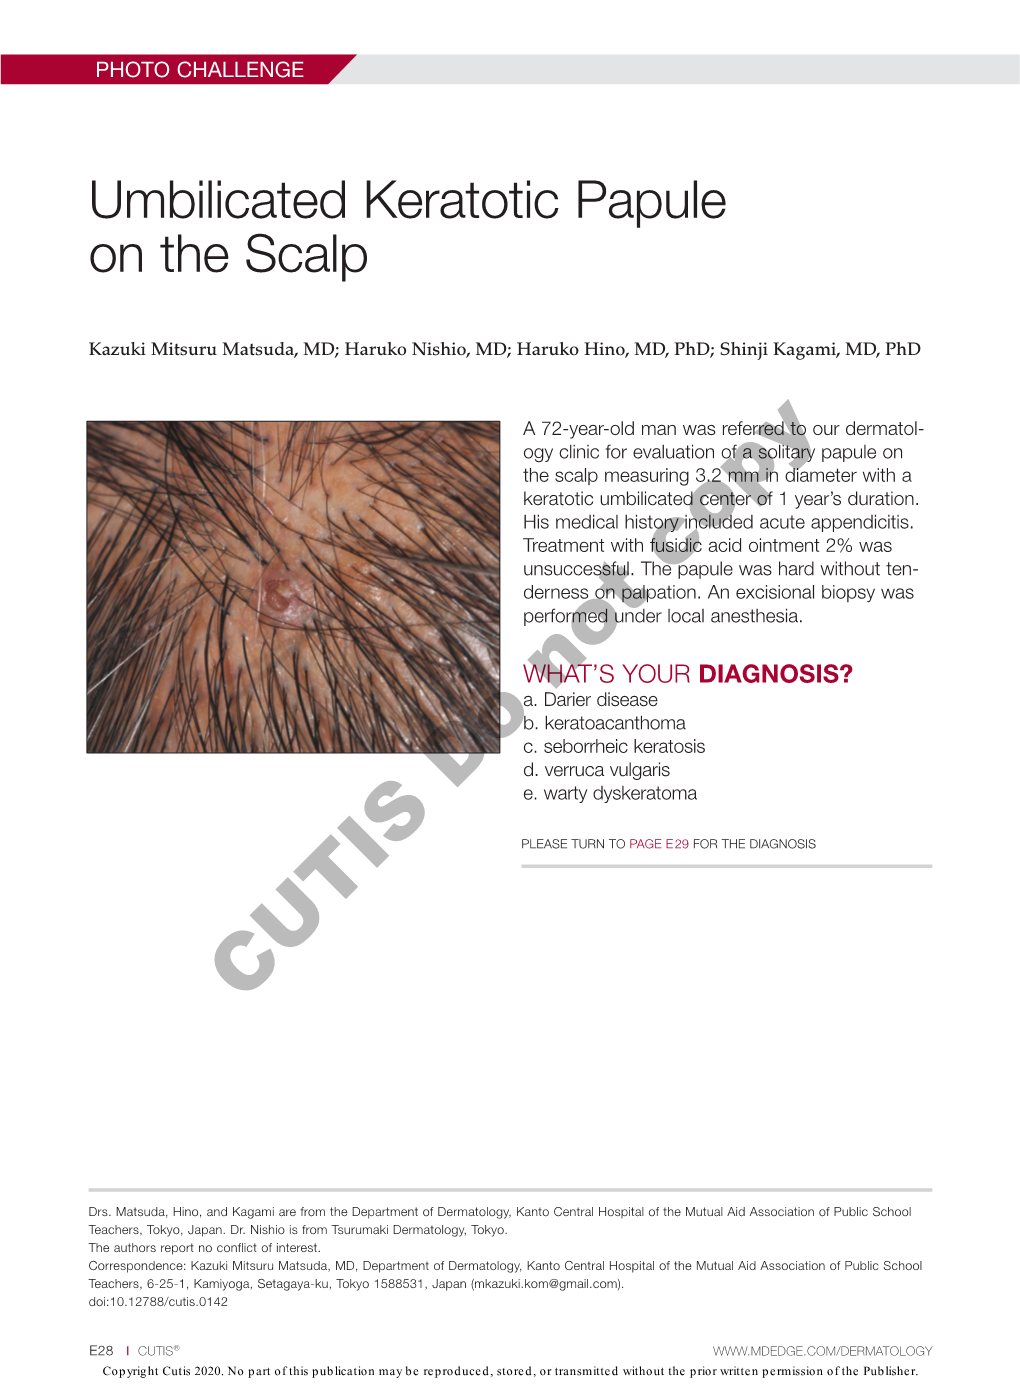 Umbilicated Keratotic Papule on the Scalp